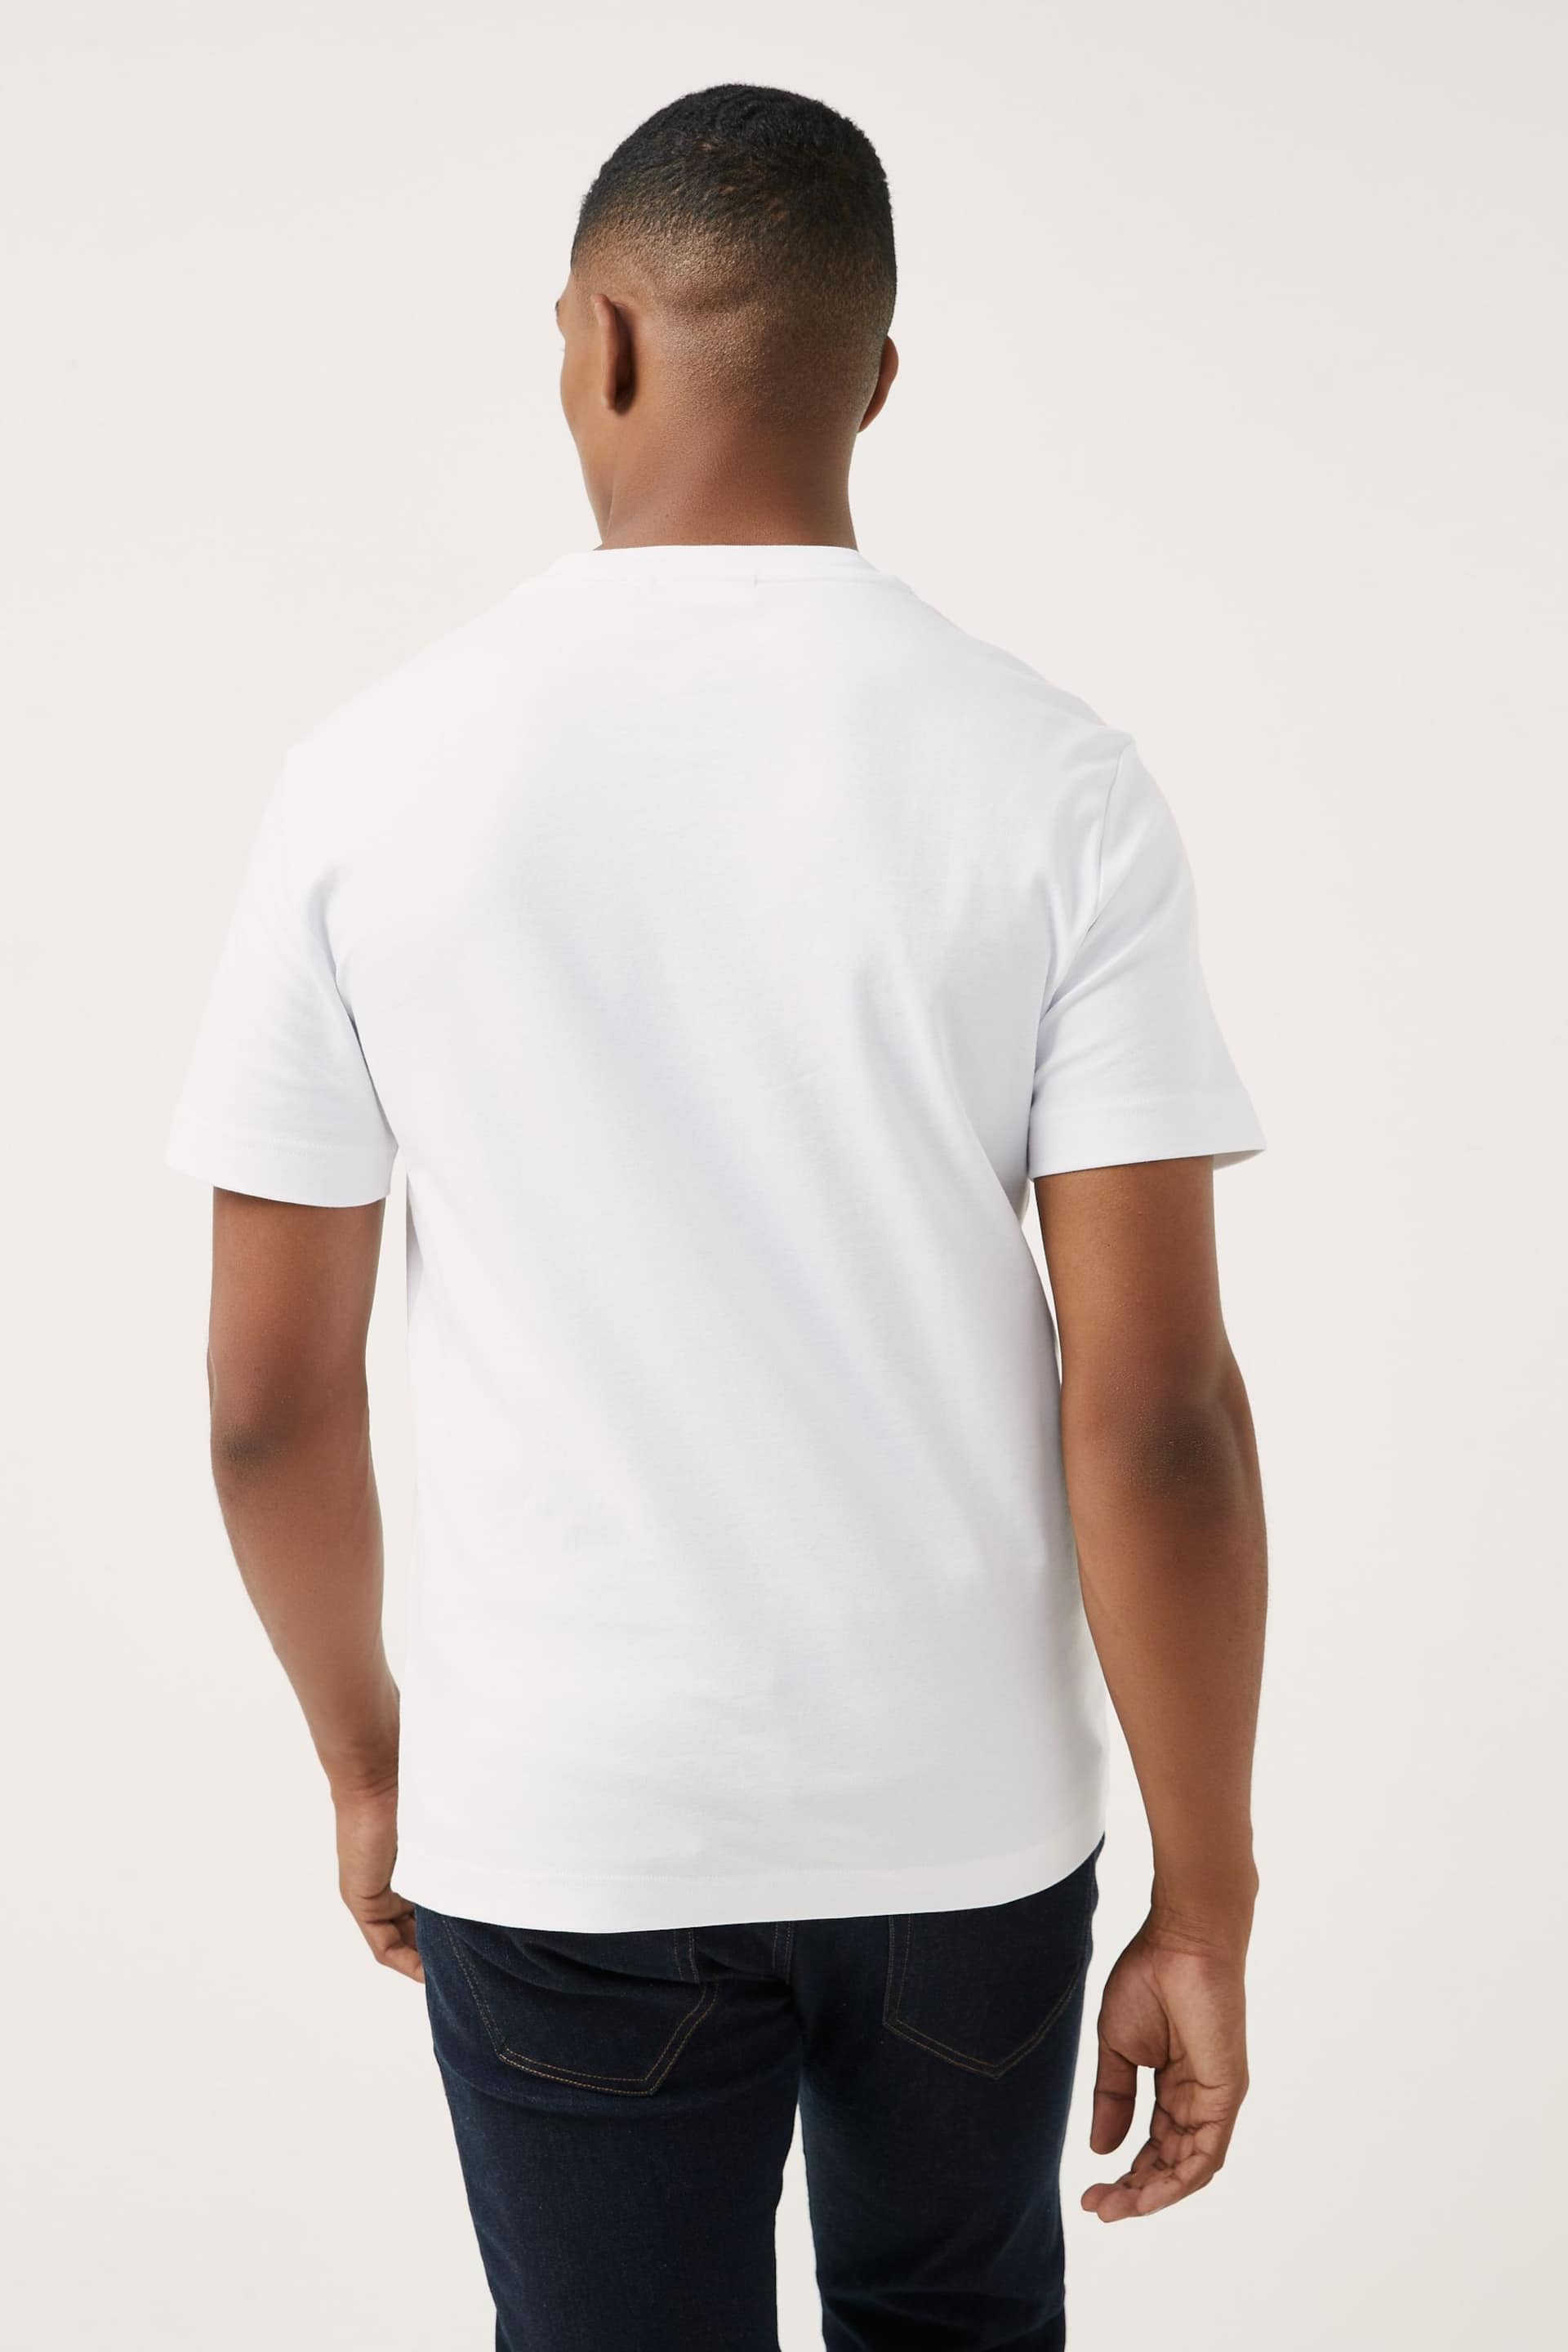 Calvin Klein White Interlock Logo T-Shirt - Image 2 of 5